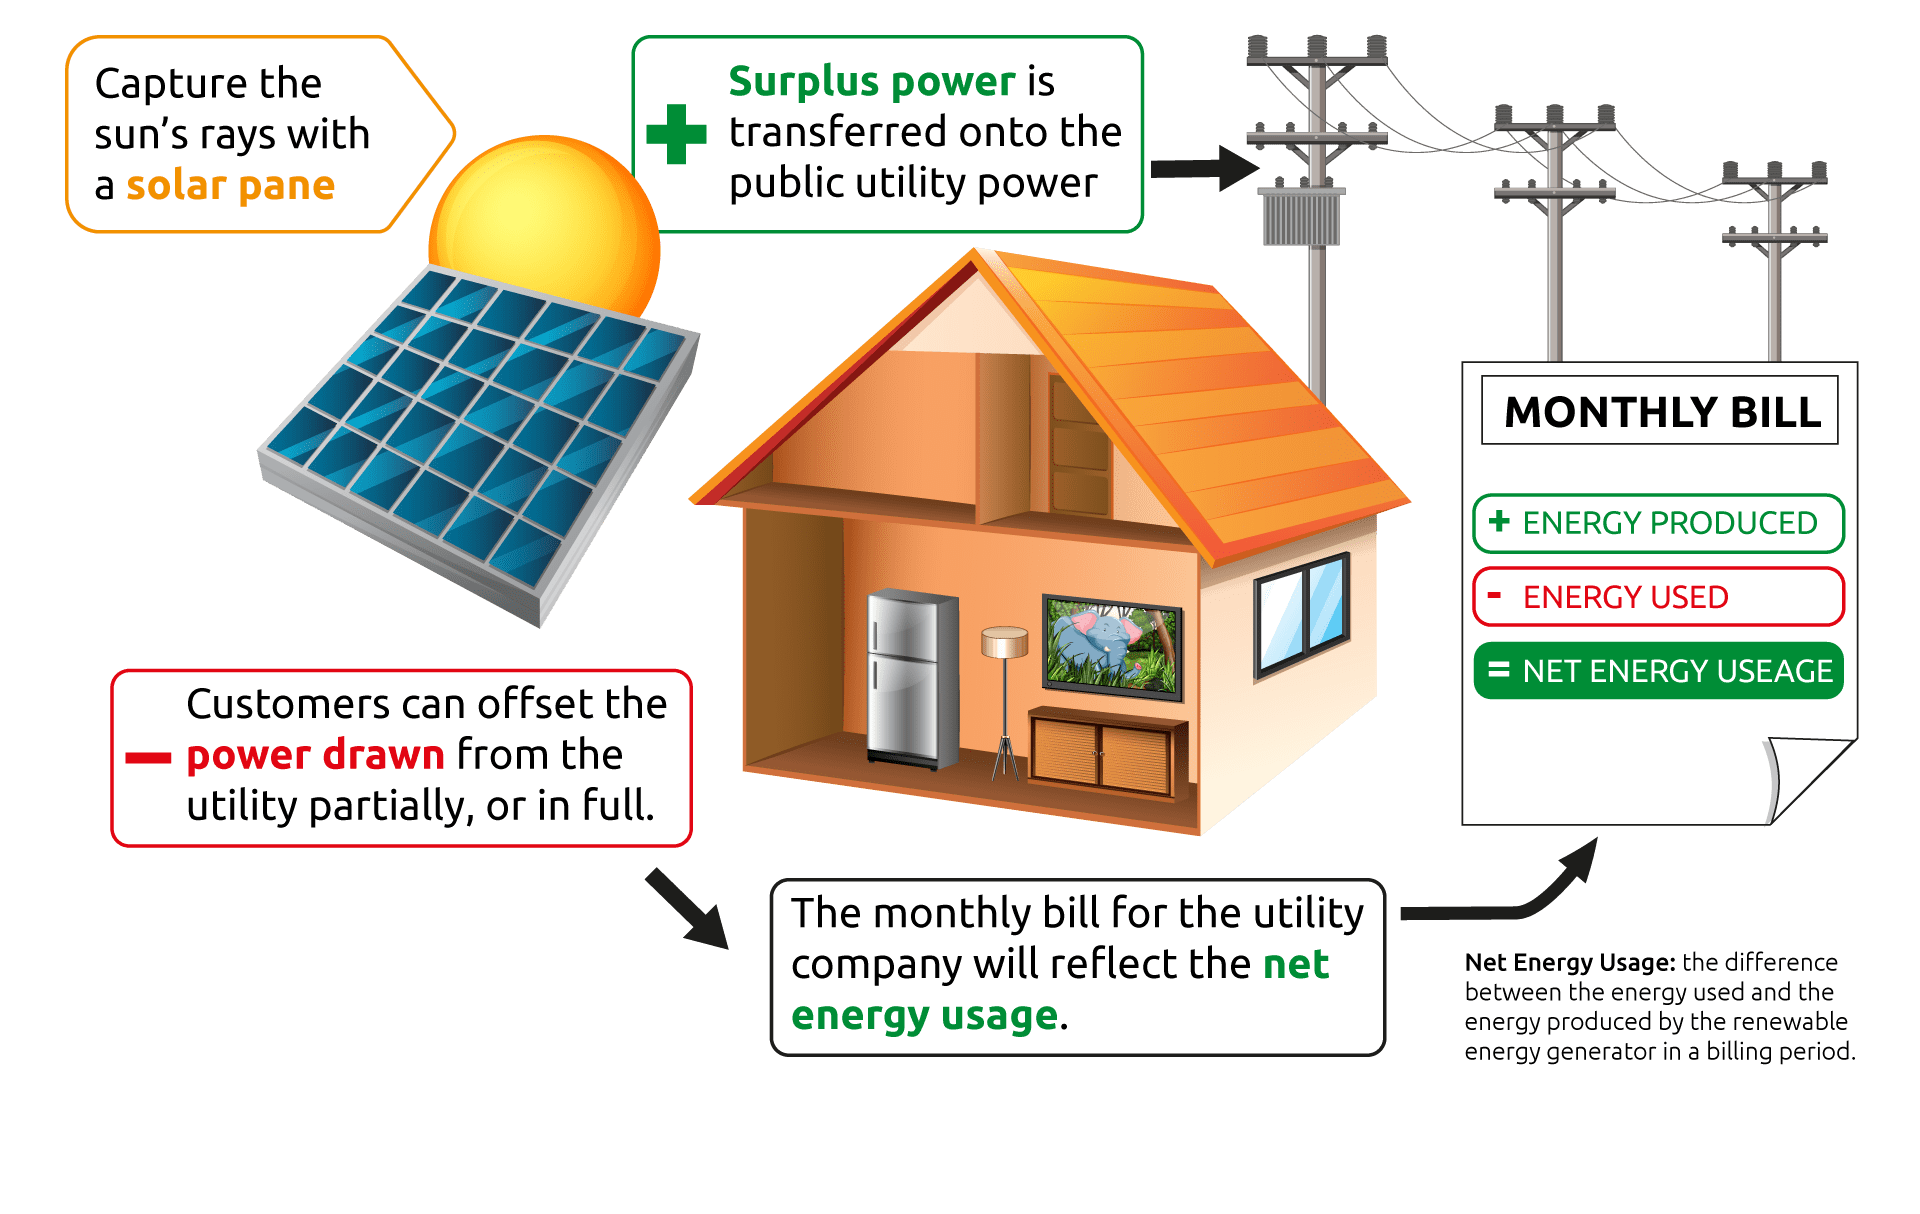 net energy usage